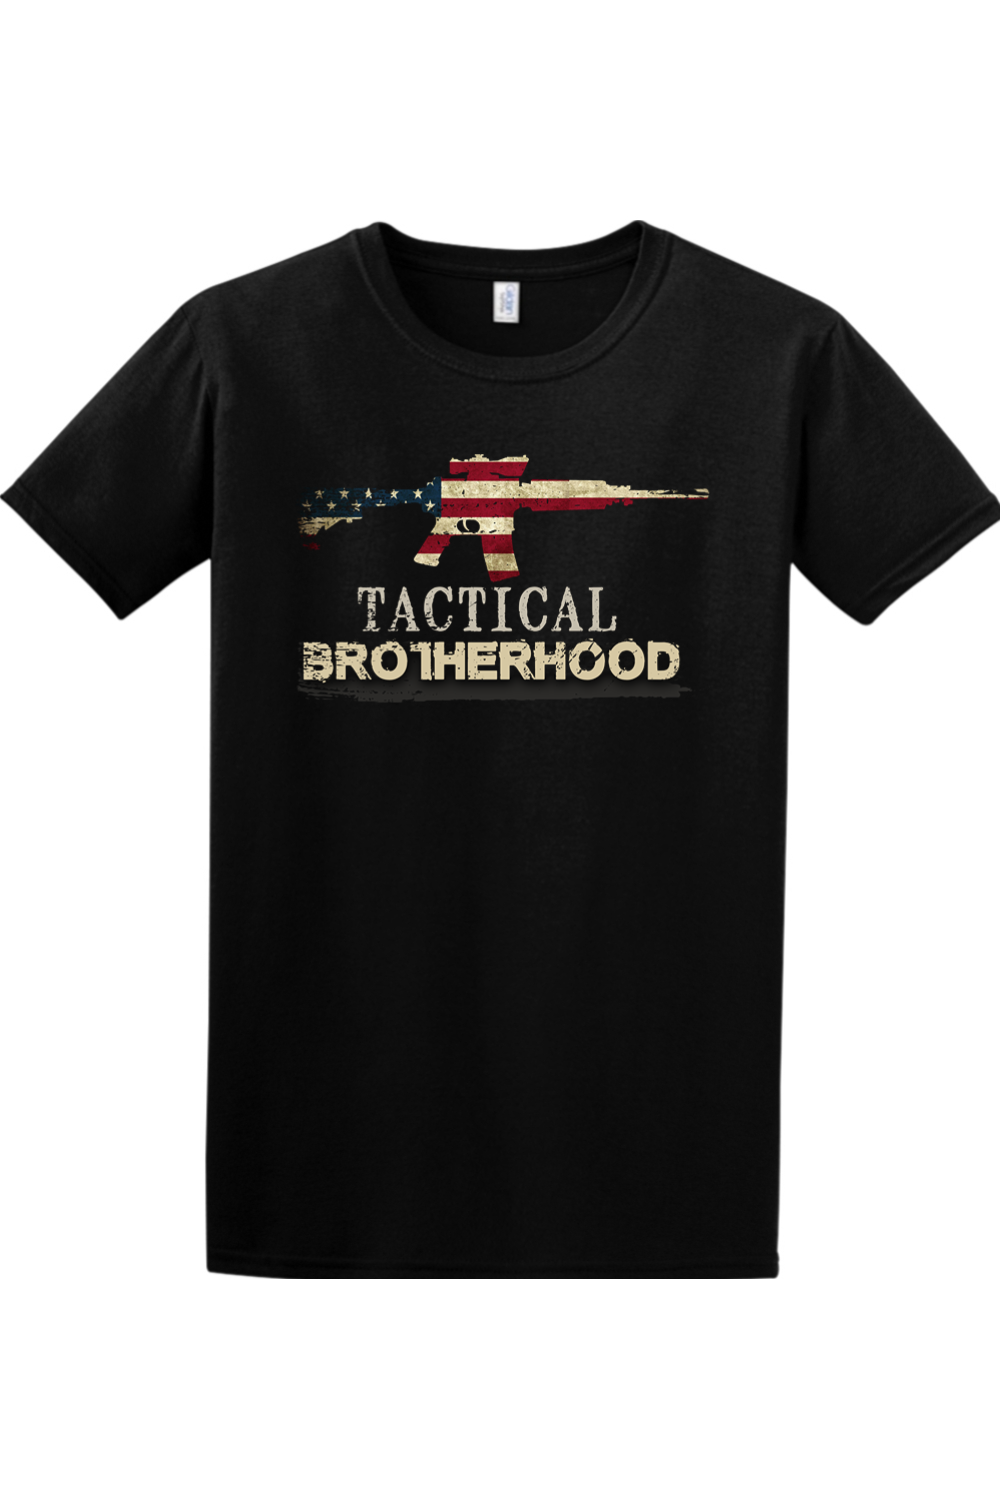 OG 3 - Tactical Brotherhood Official T-Shirt